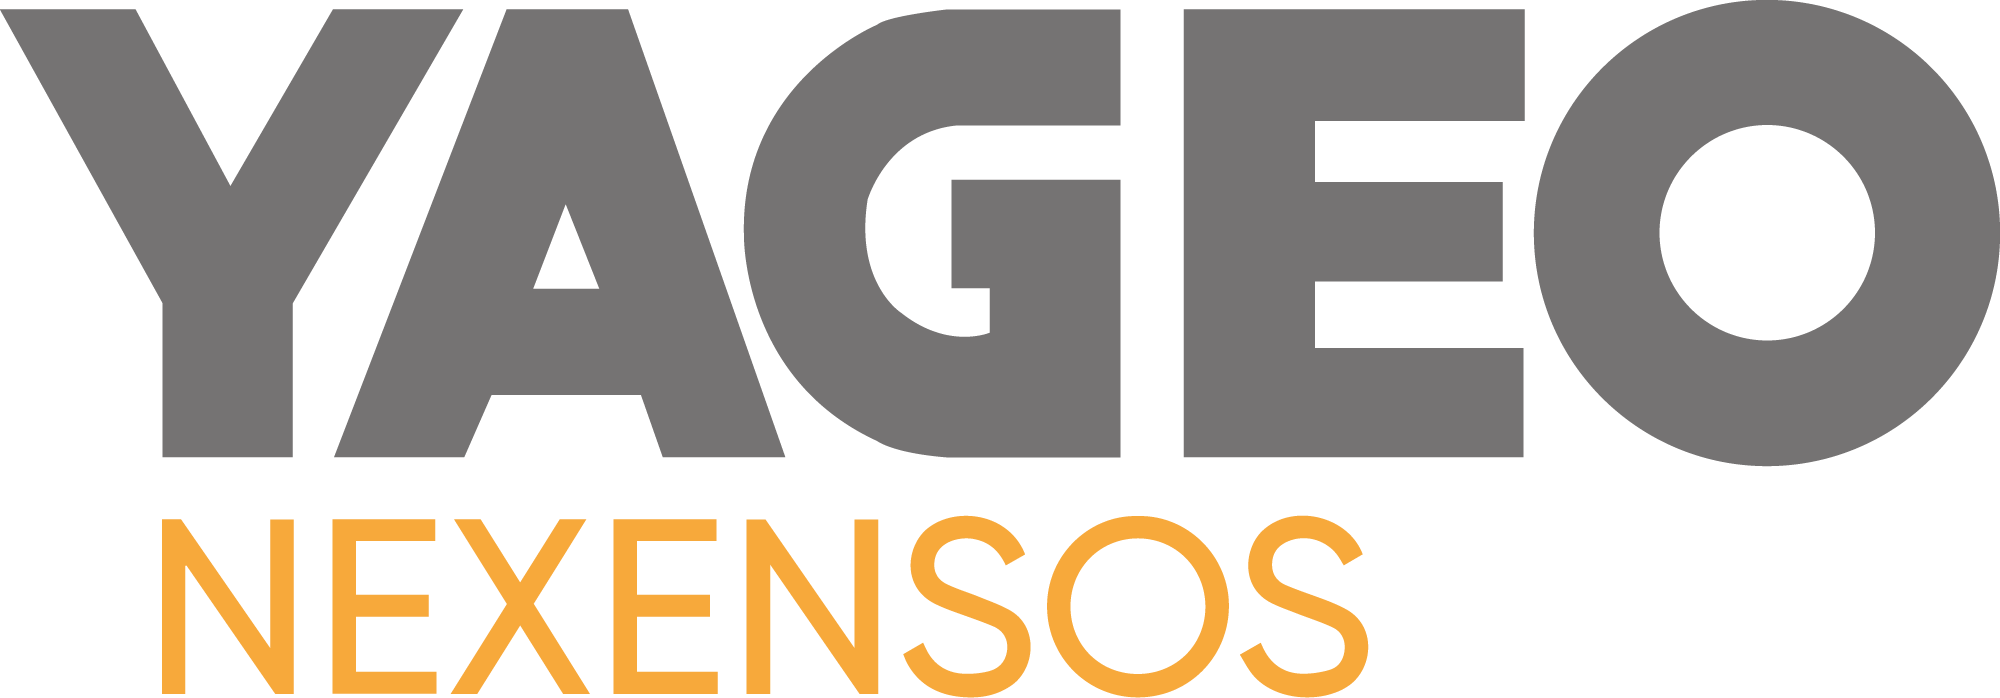 Yageo Nexensos Logo